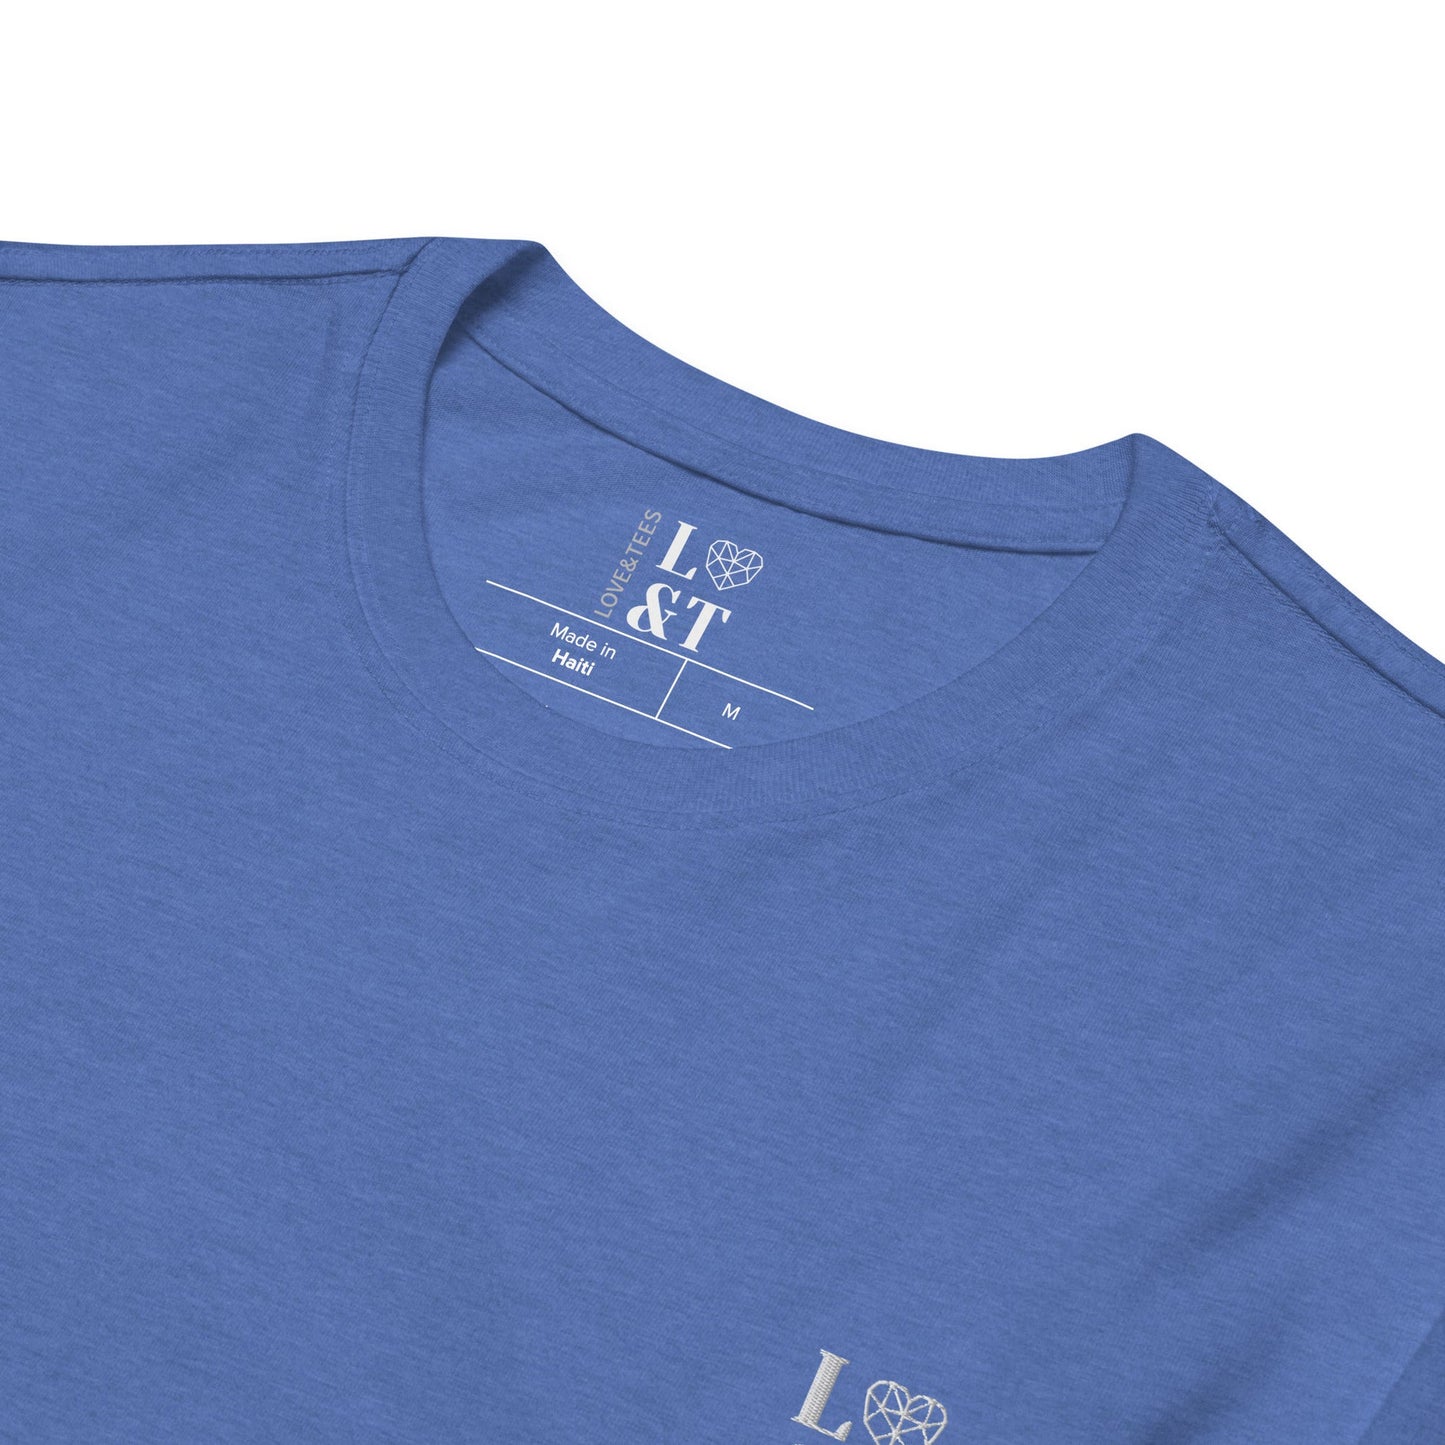 L&T's Unisex Long Sleeve T-Shirt - Love&Tees